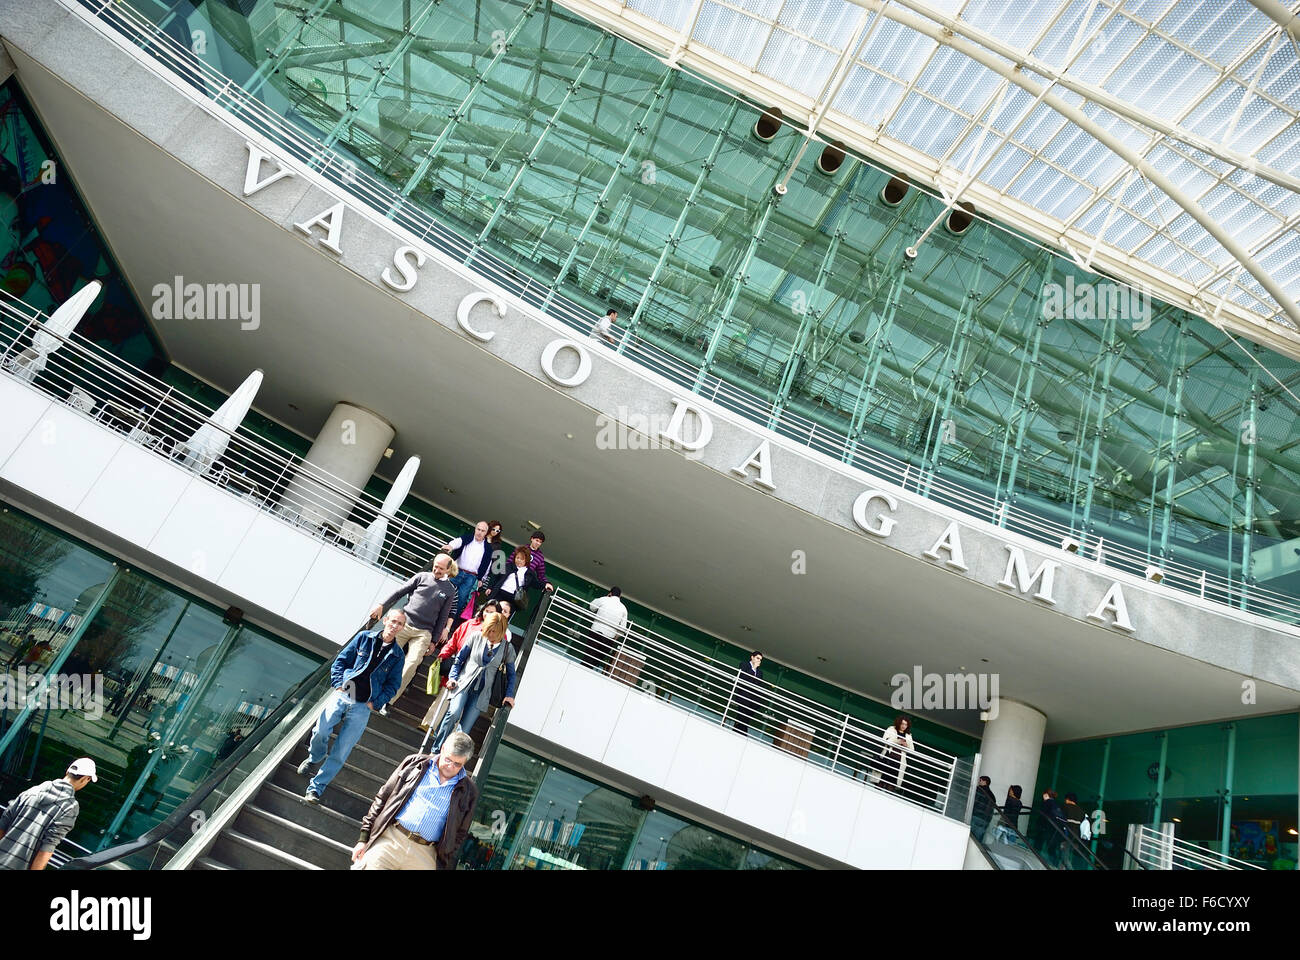 Vasco Da Gama Shopping Mall. Park der Nationen - Parque Das Nacoes - Lissabon. Portugal. Europa. Stockfoto